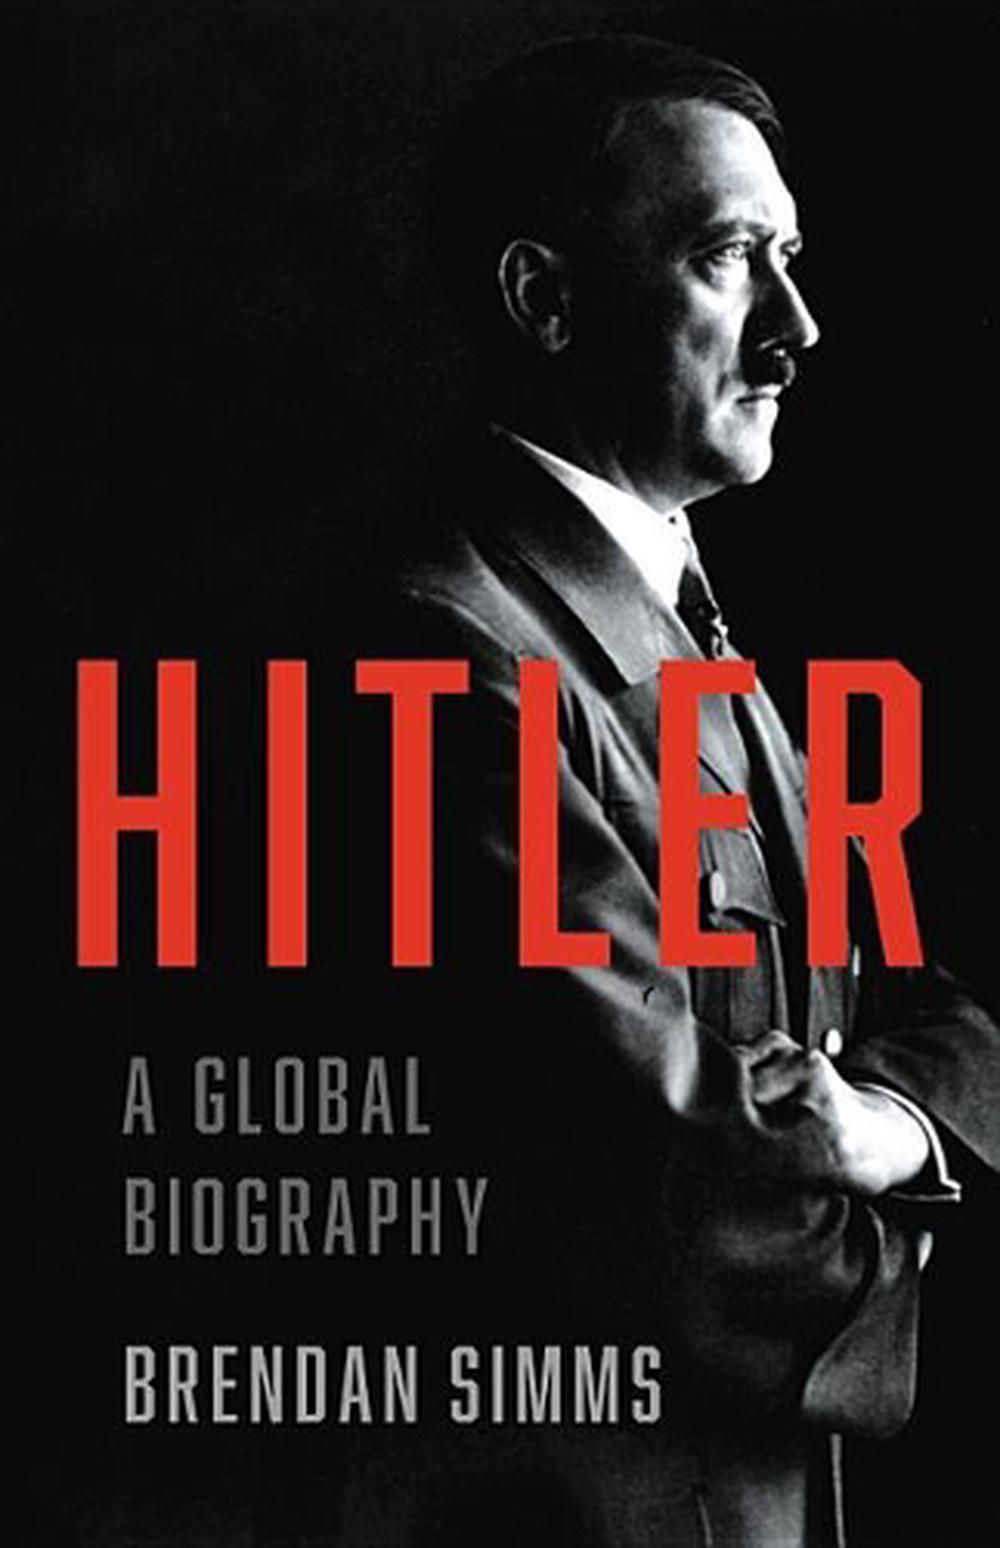 write the biography of hitler